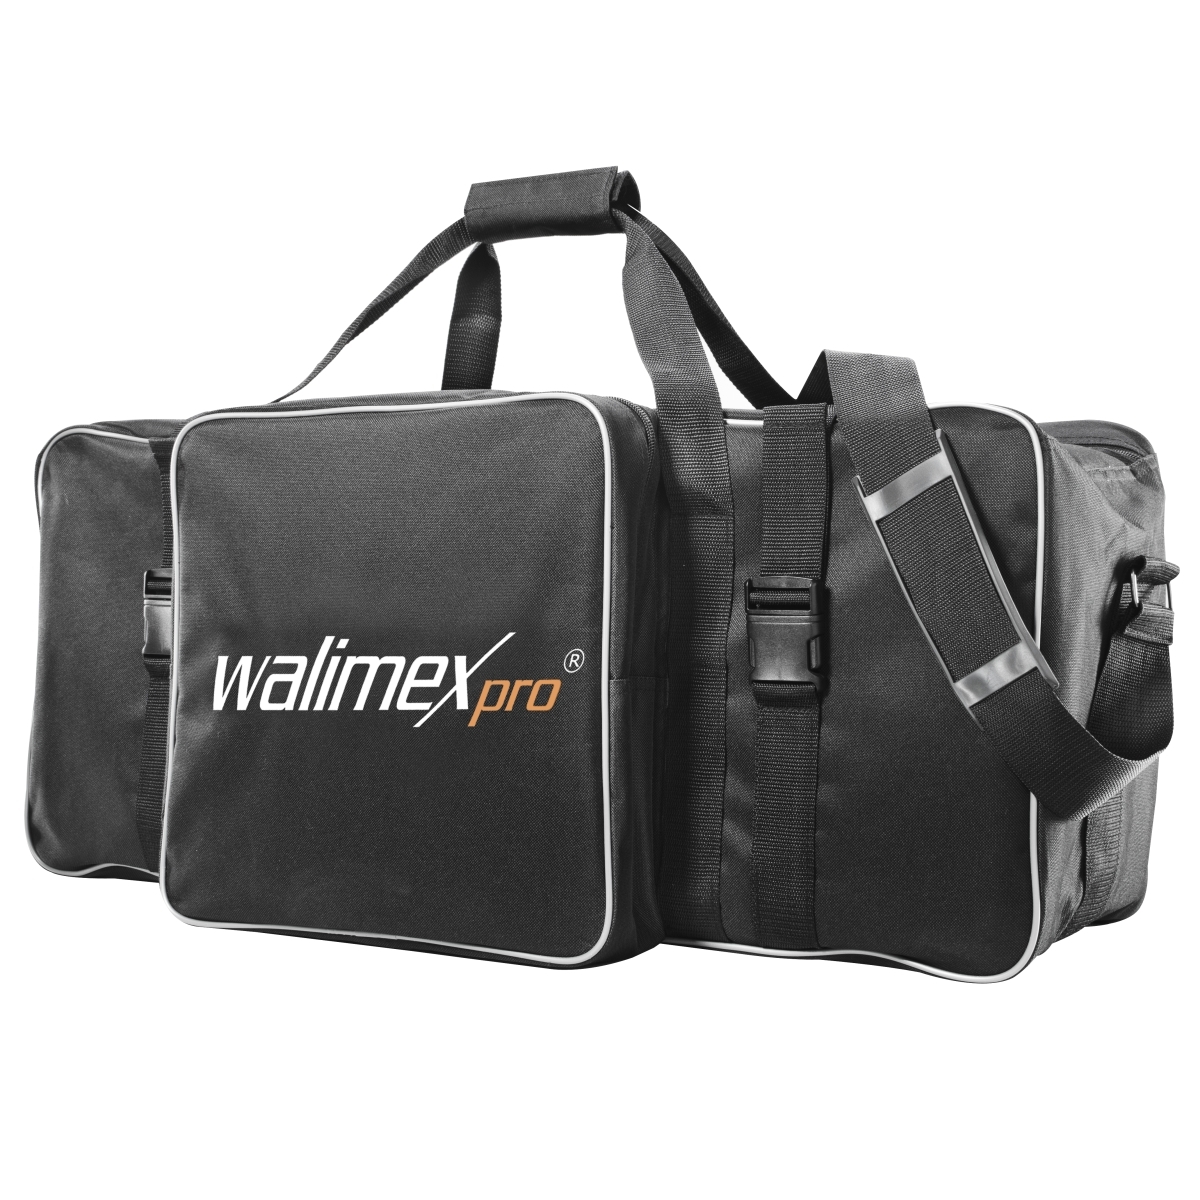 Walimex pro Studio Bag XL 75cm